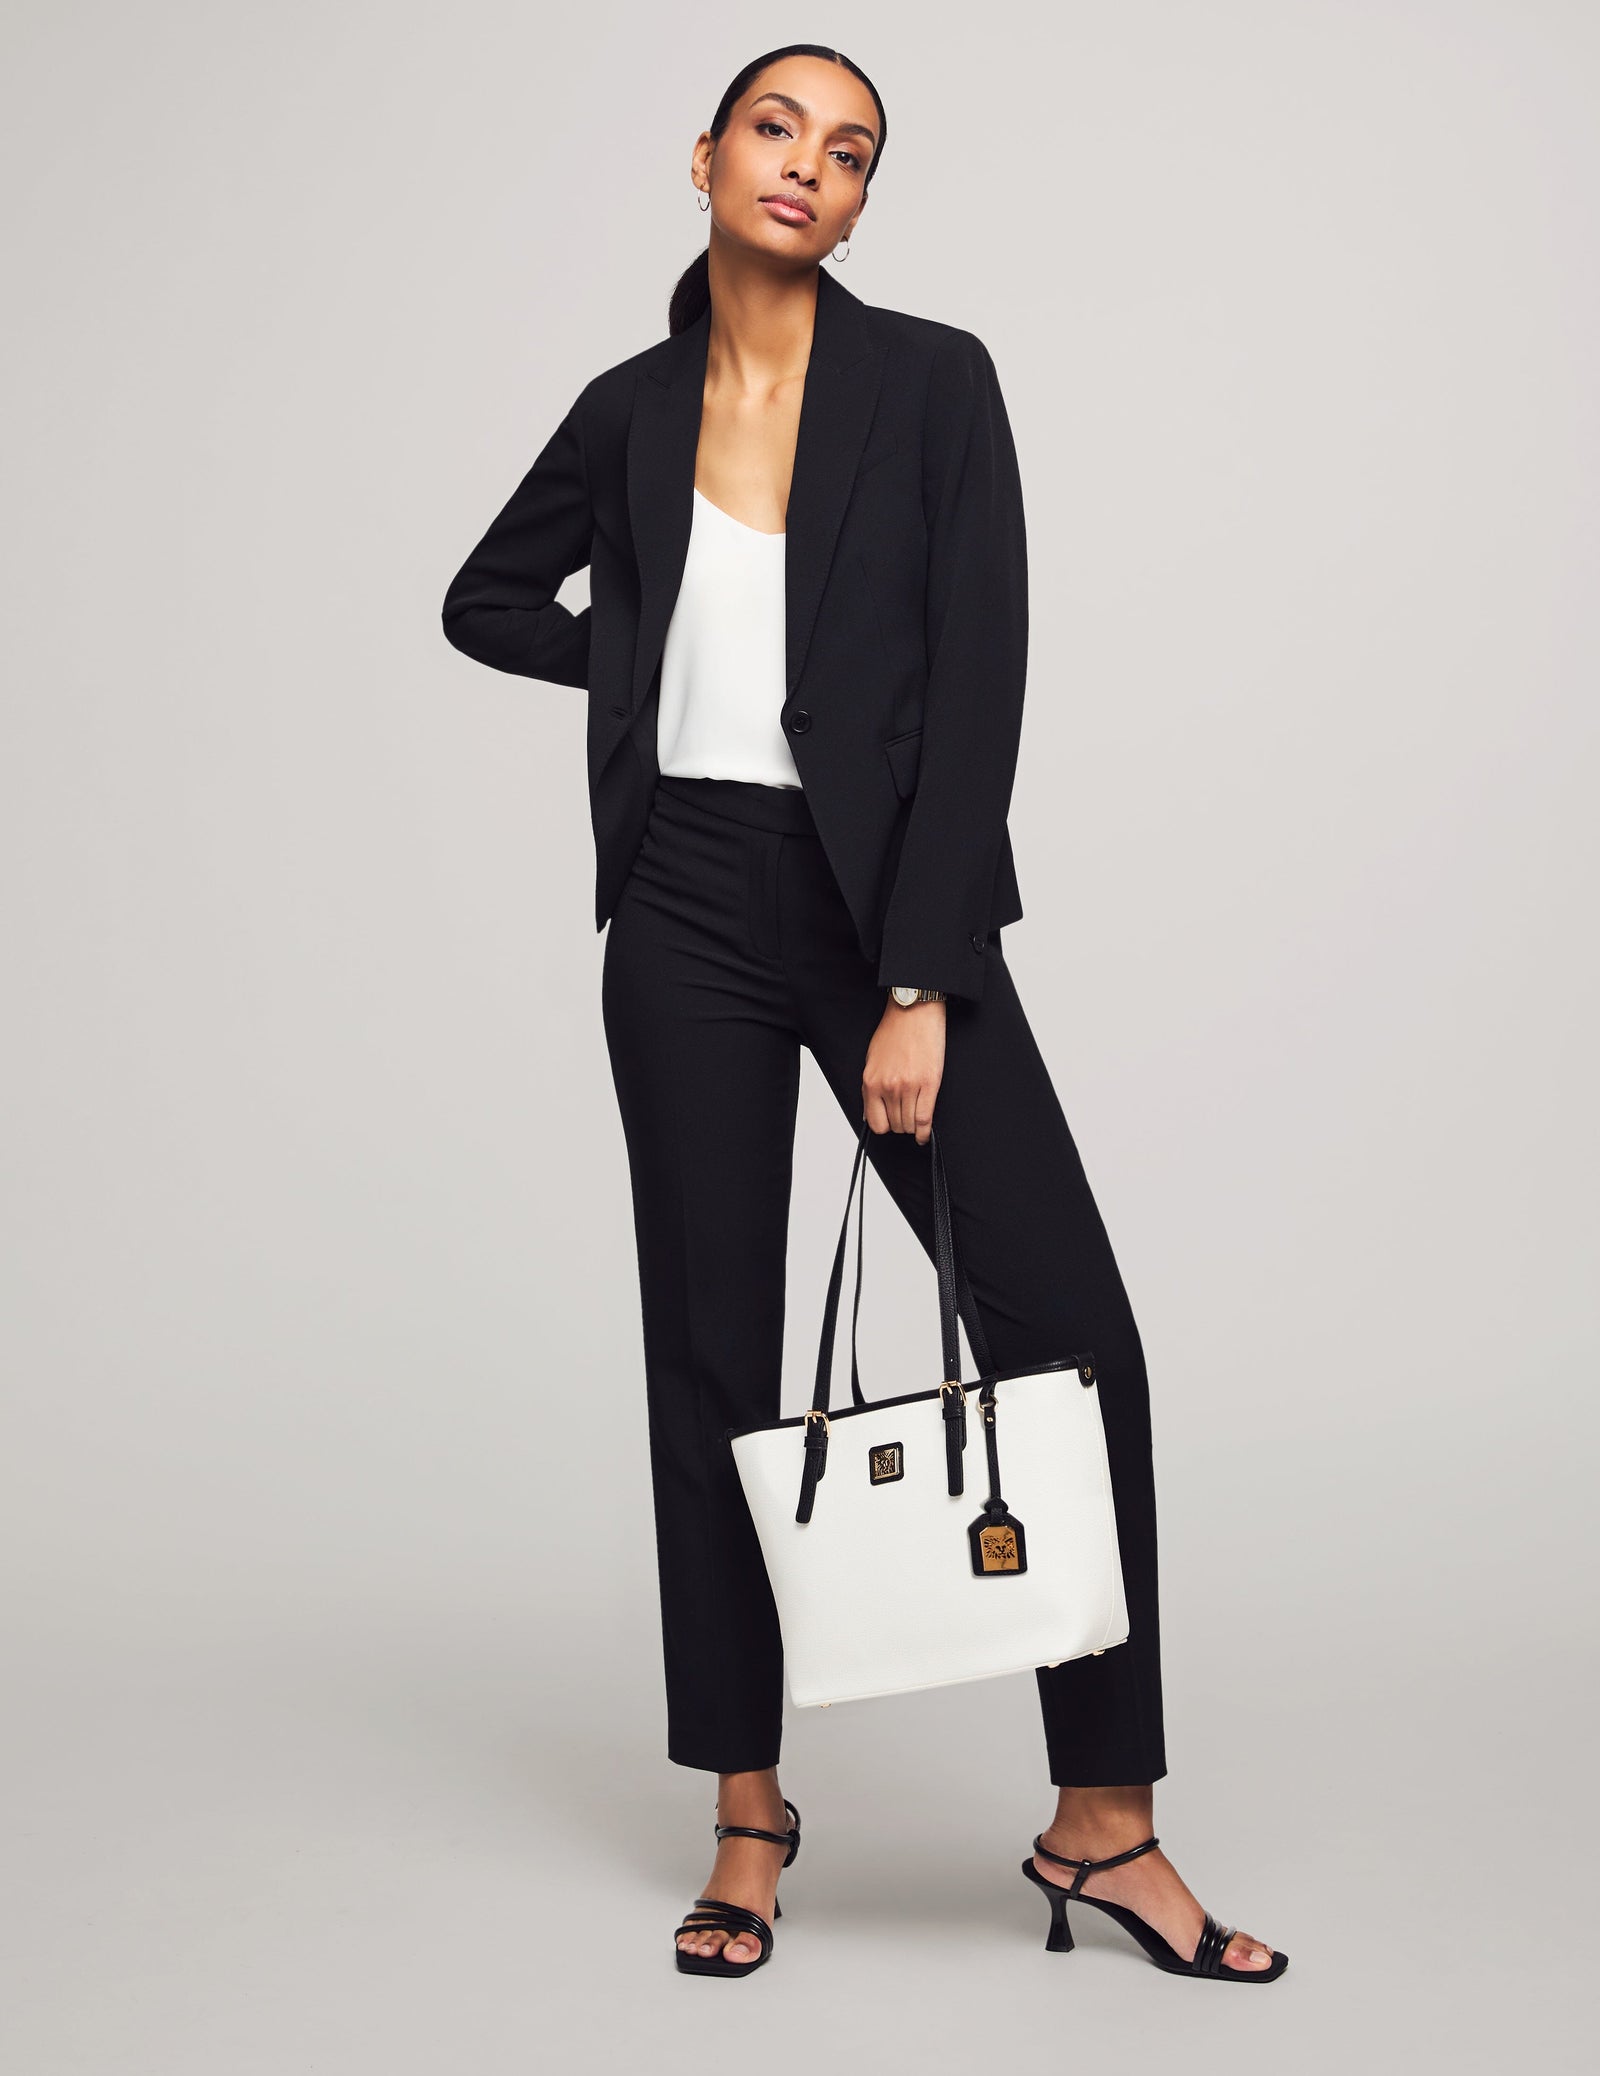 Wear to Work - Suiting  Anne Klein Tagged Jackets & Blazers